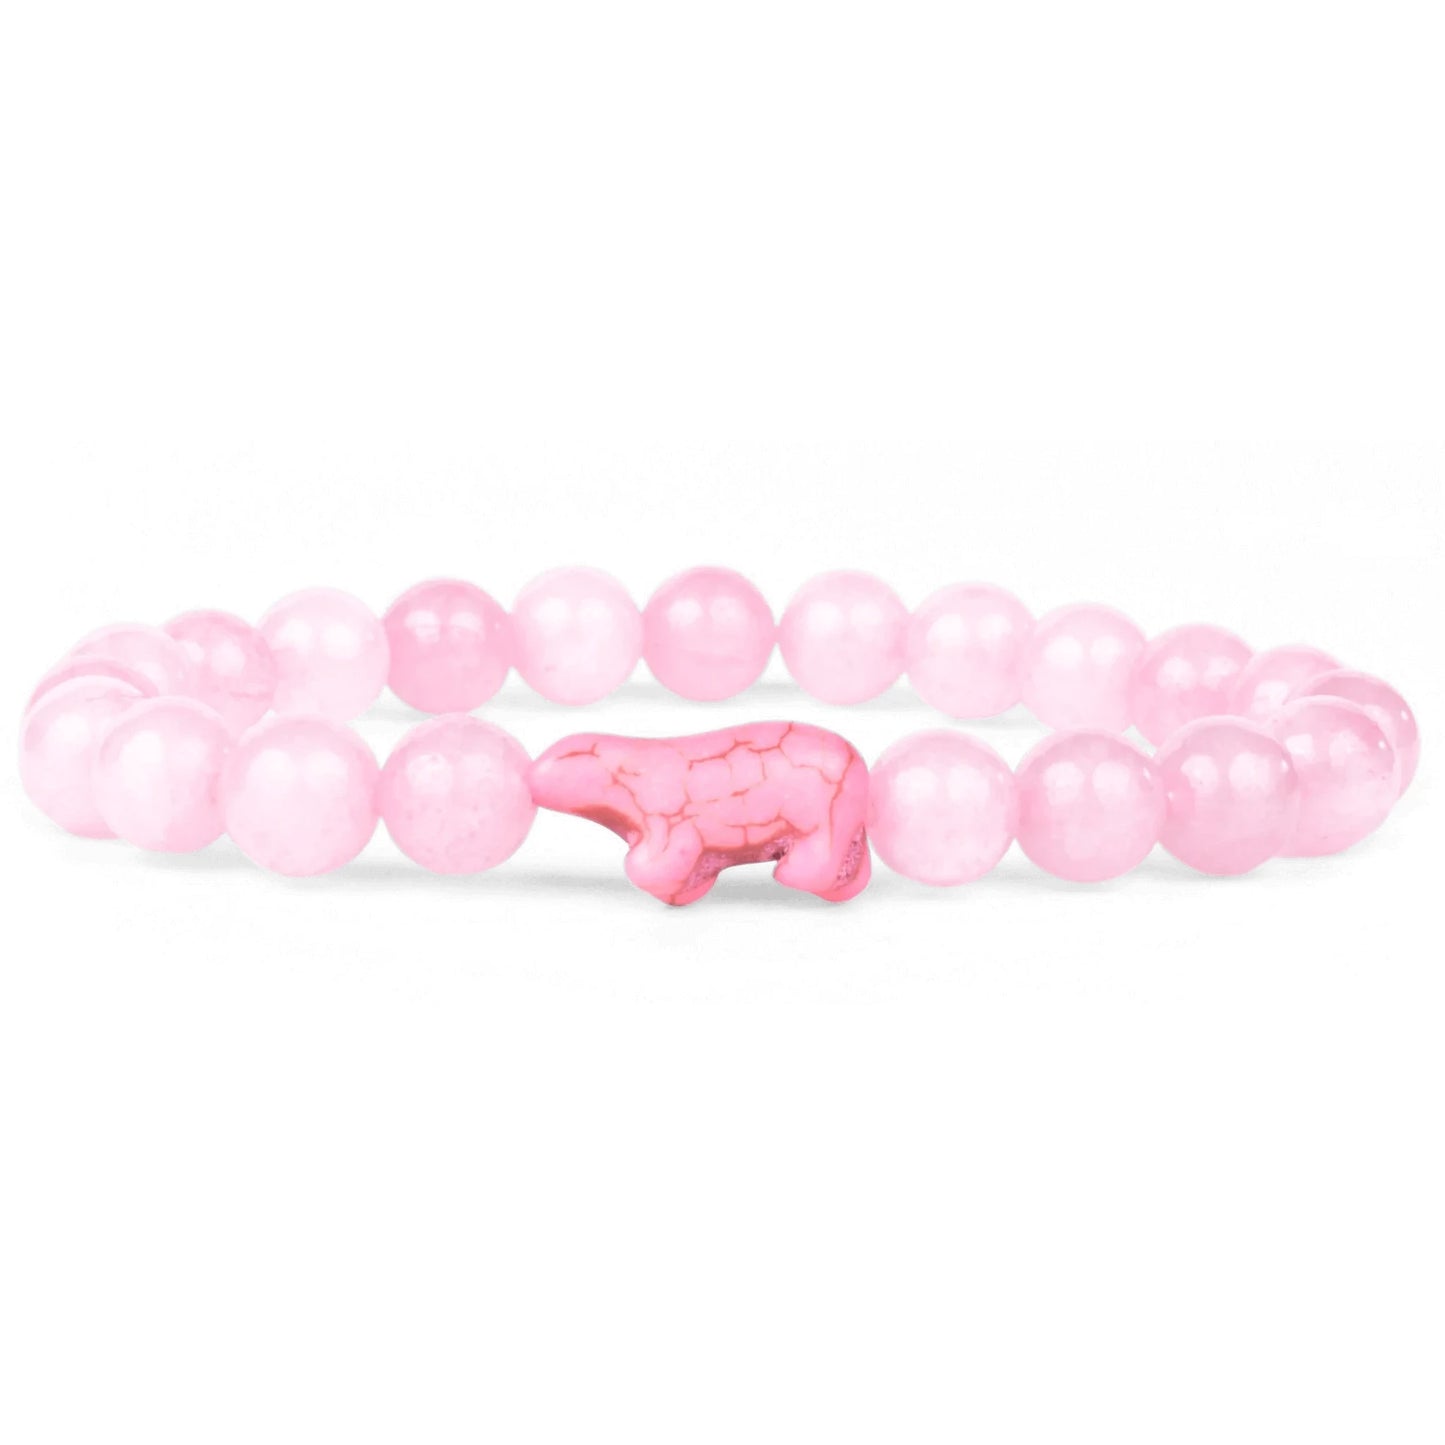 Fahlo The Venture Polar Bear Tracking Bracelet - Limited Edition Northern Light Pink